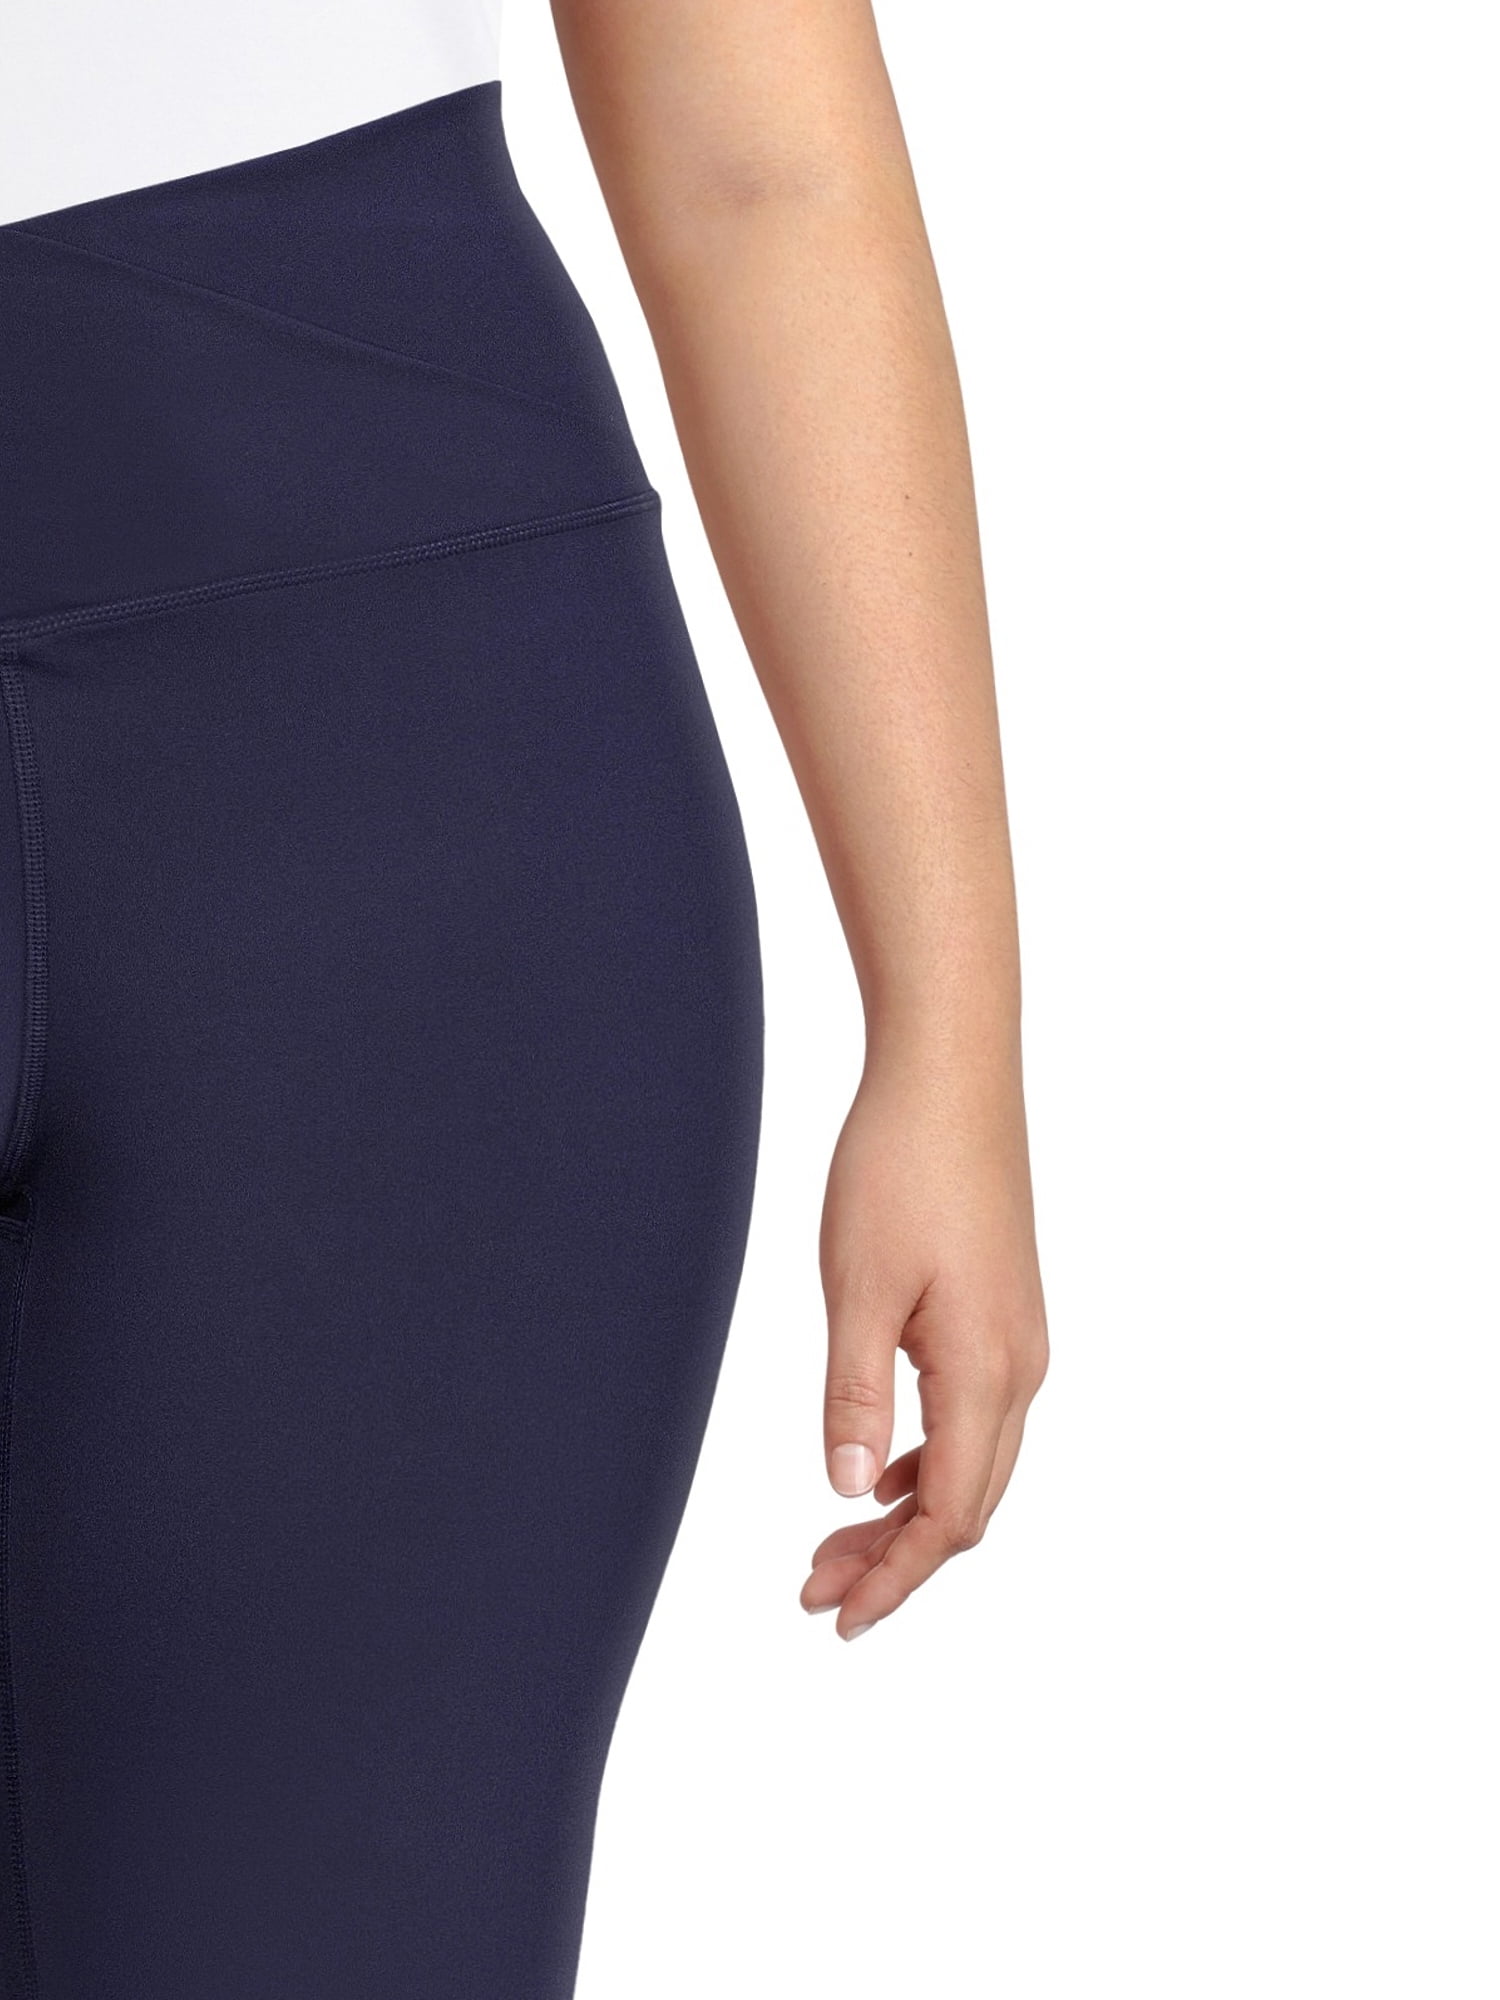 Avia Women's Plus Size Crossover Waist Flare Yoga Pants 